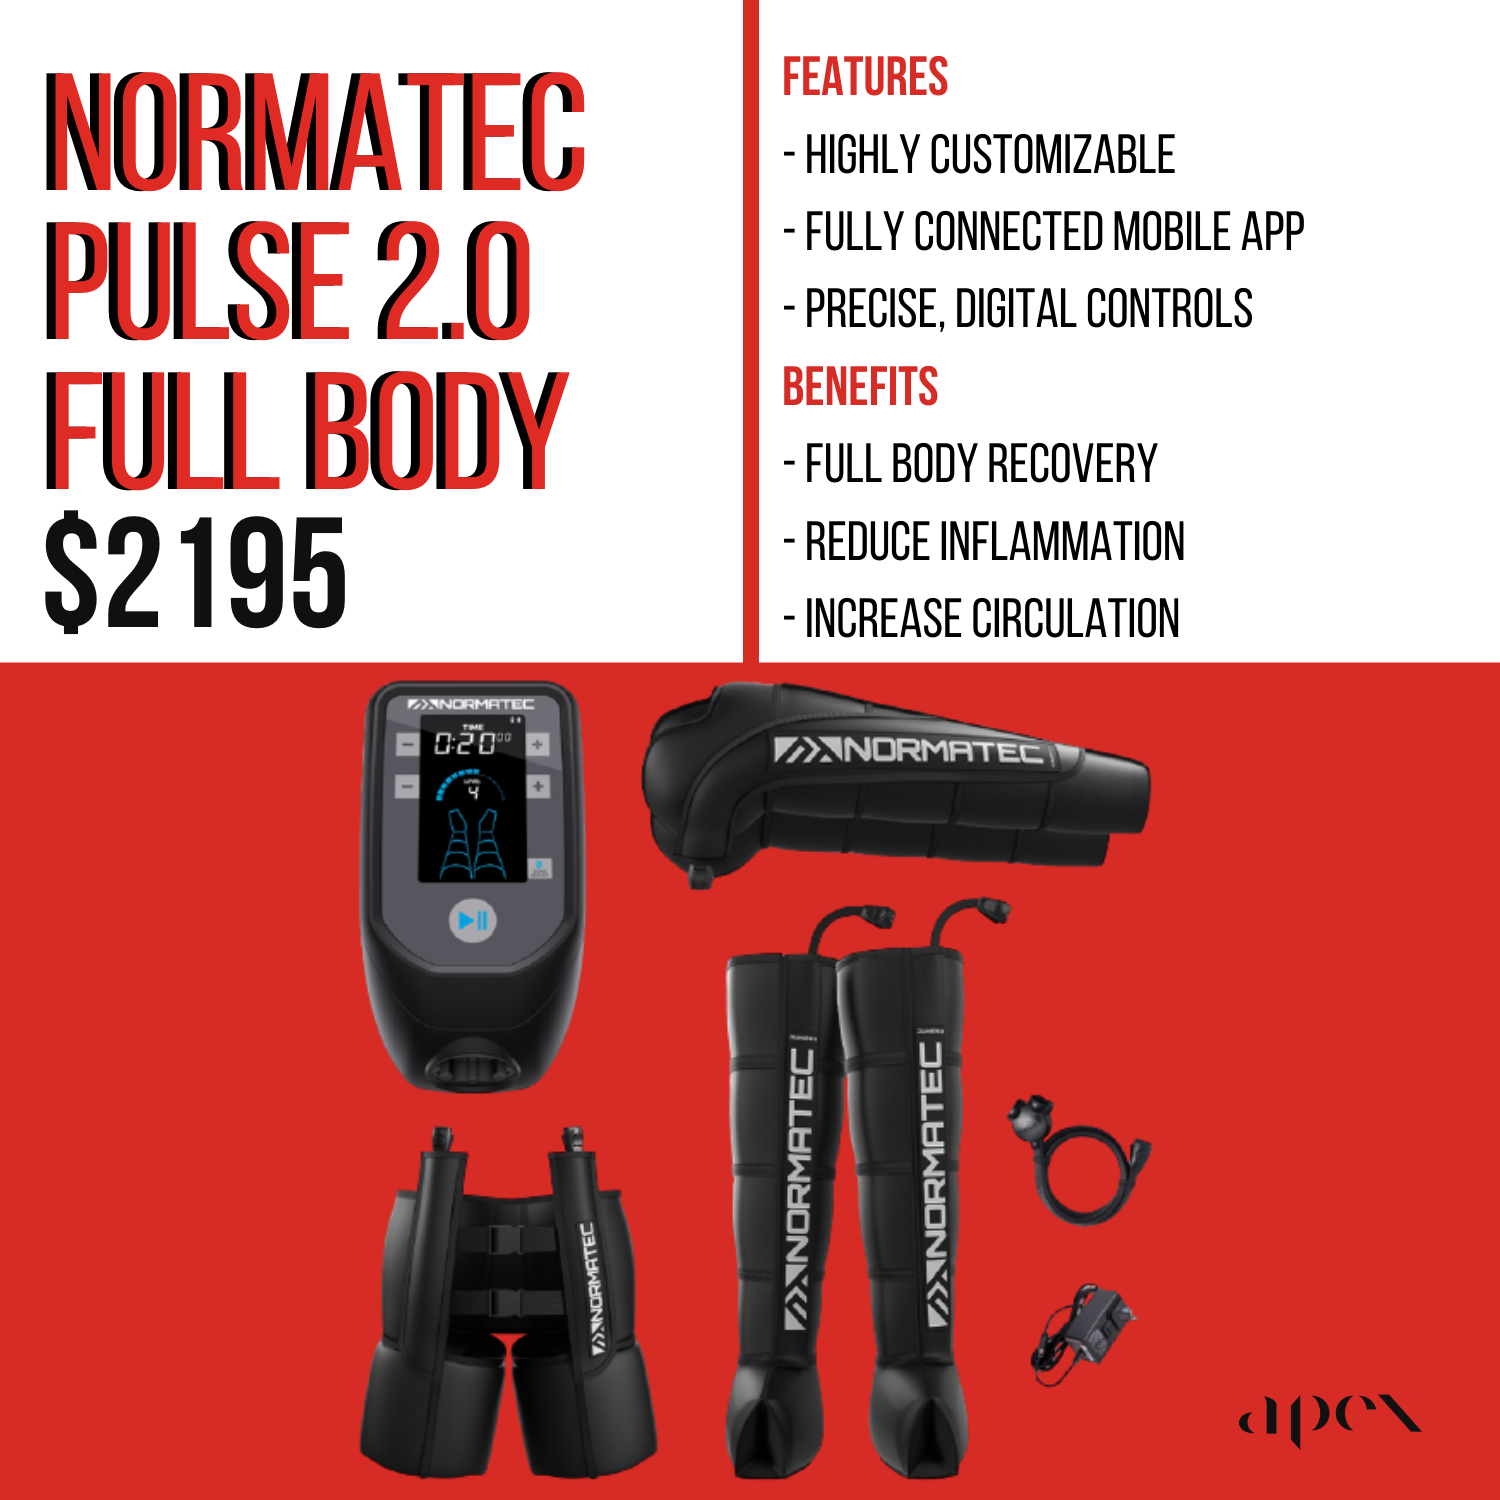 Normatec Pulse 2.0 Full body.png